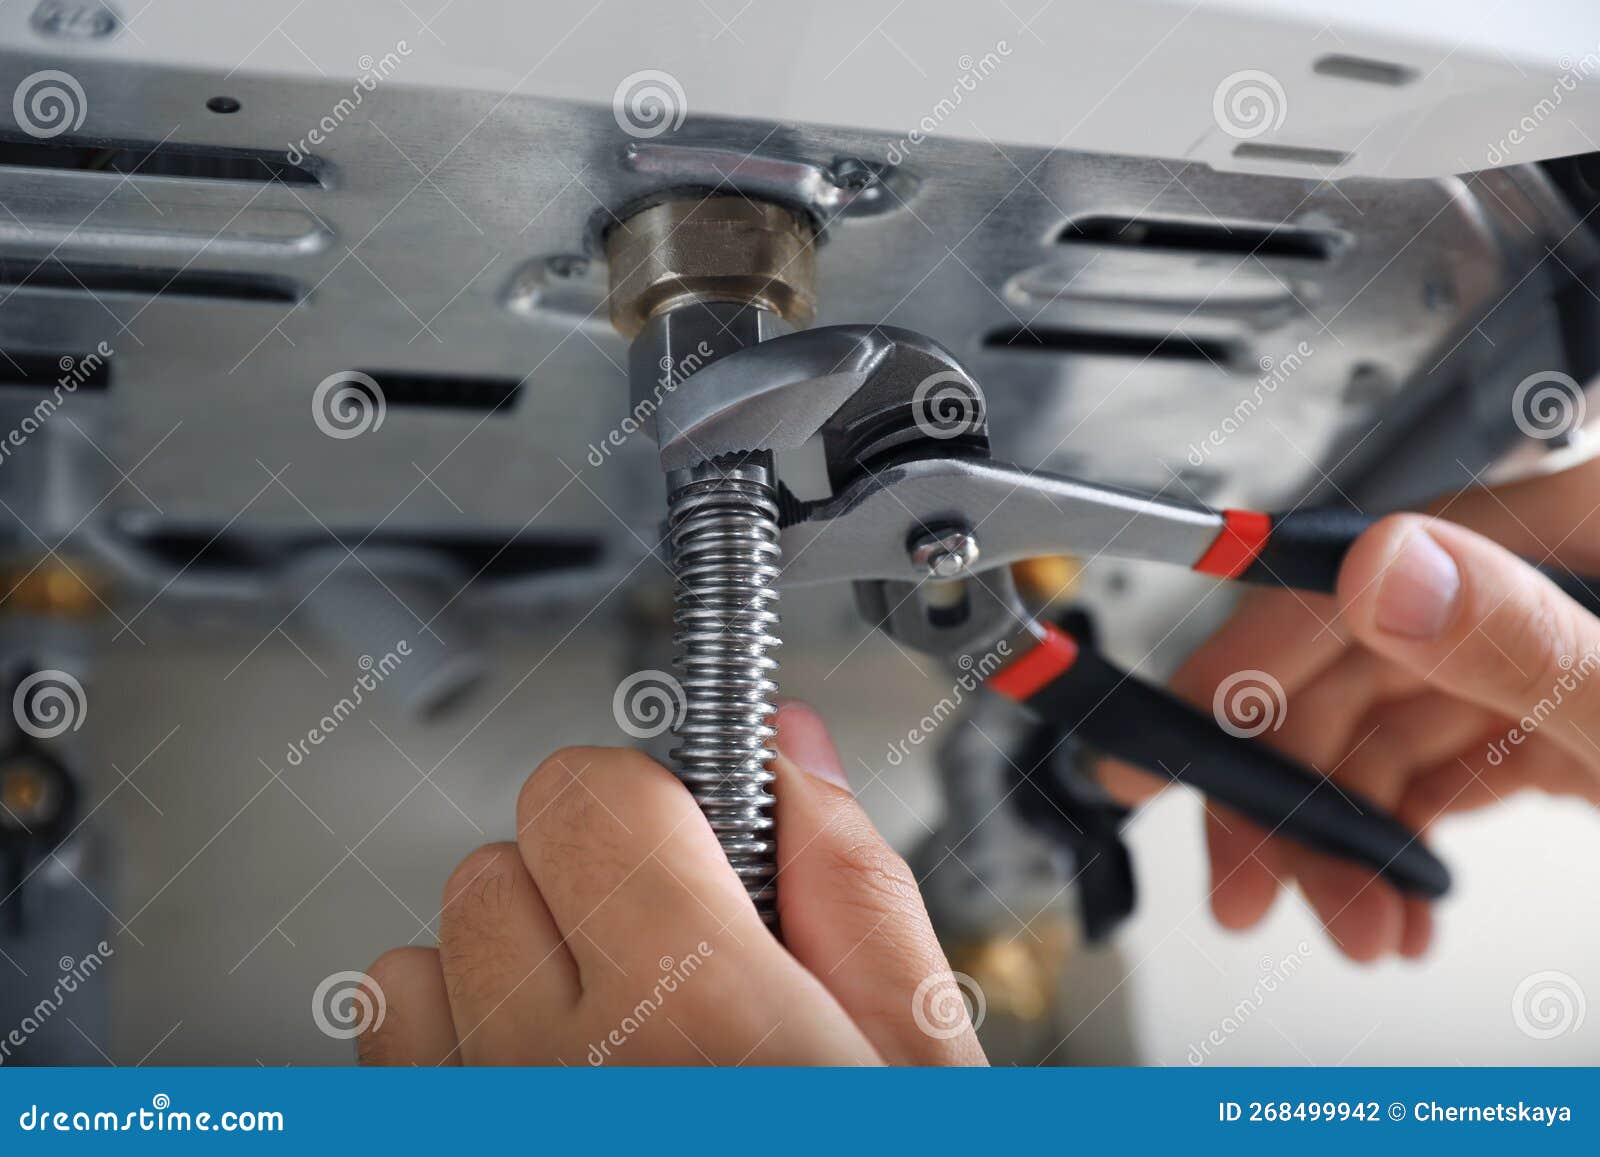 man repairing gas boiler with waterpump plier, closeup